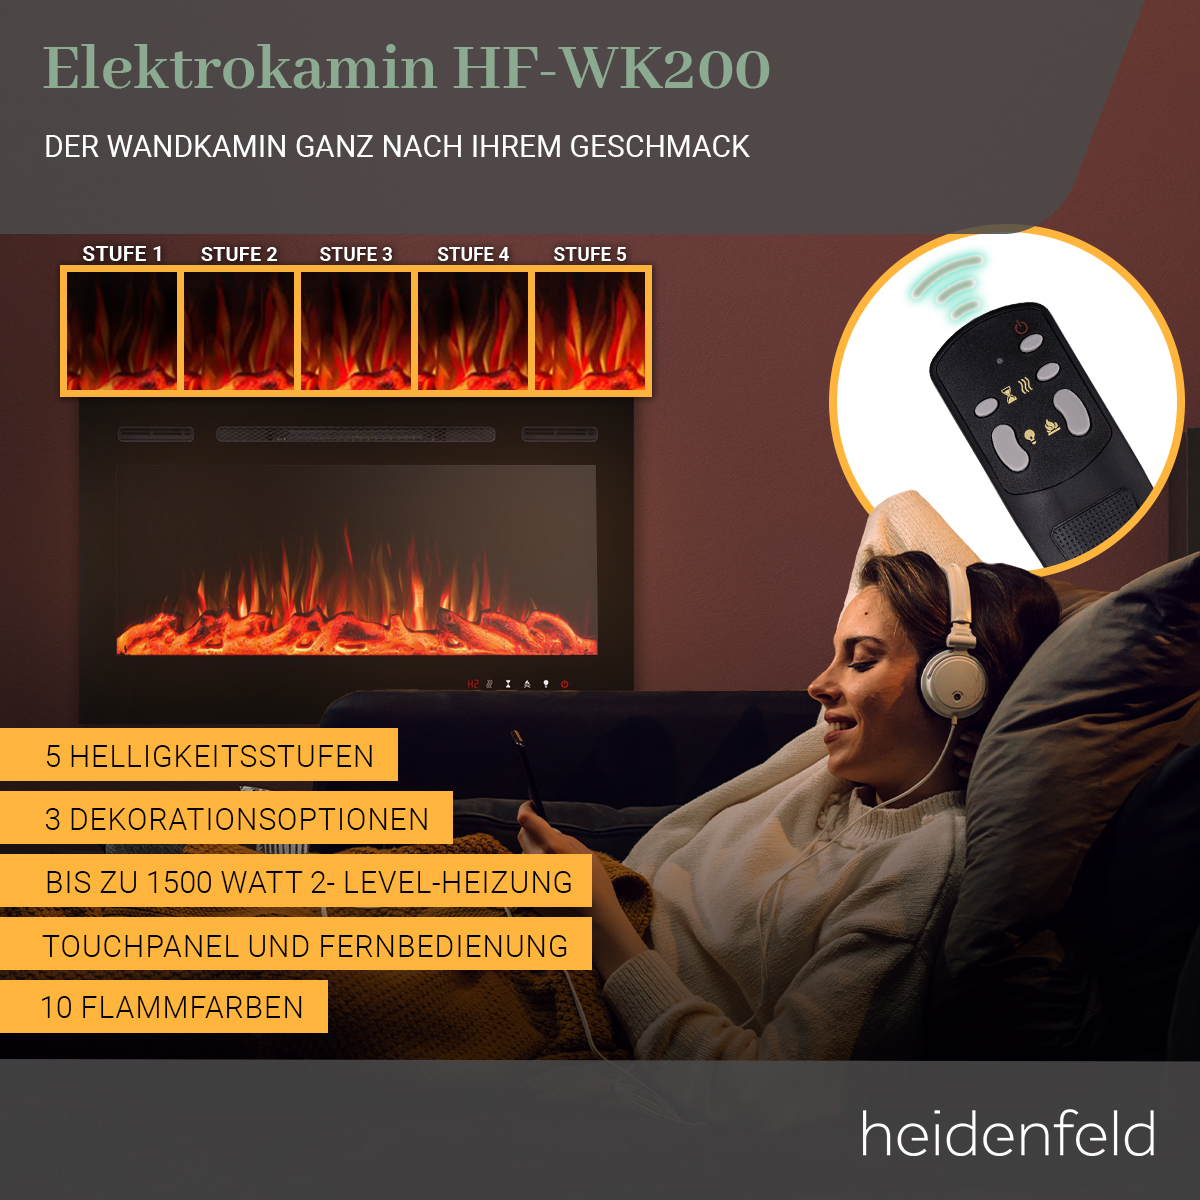 HF-WK200 Elektrokamin HEIDENFELD Watt) (1500 50 Zoll Wandkamin